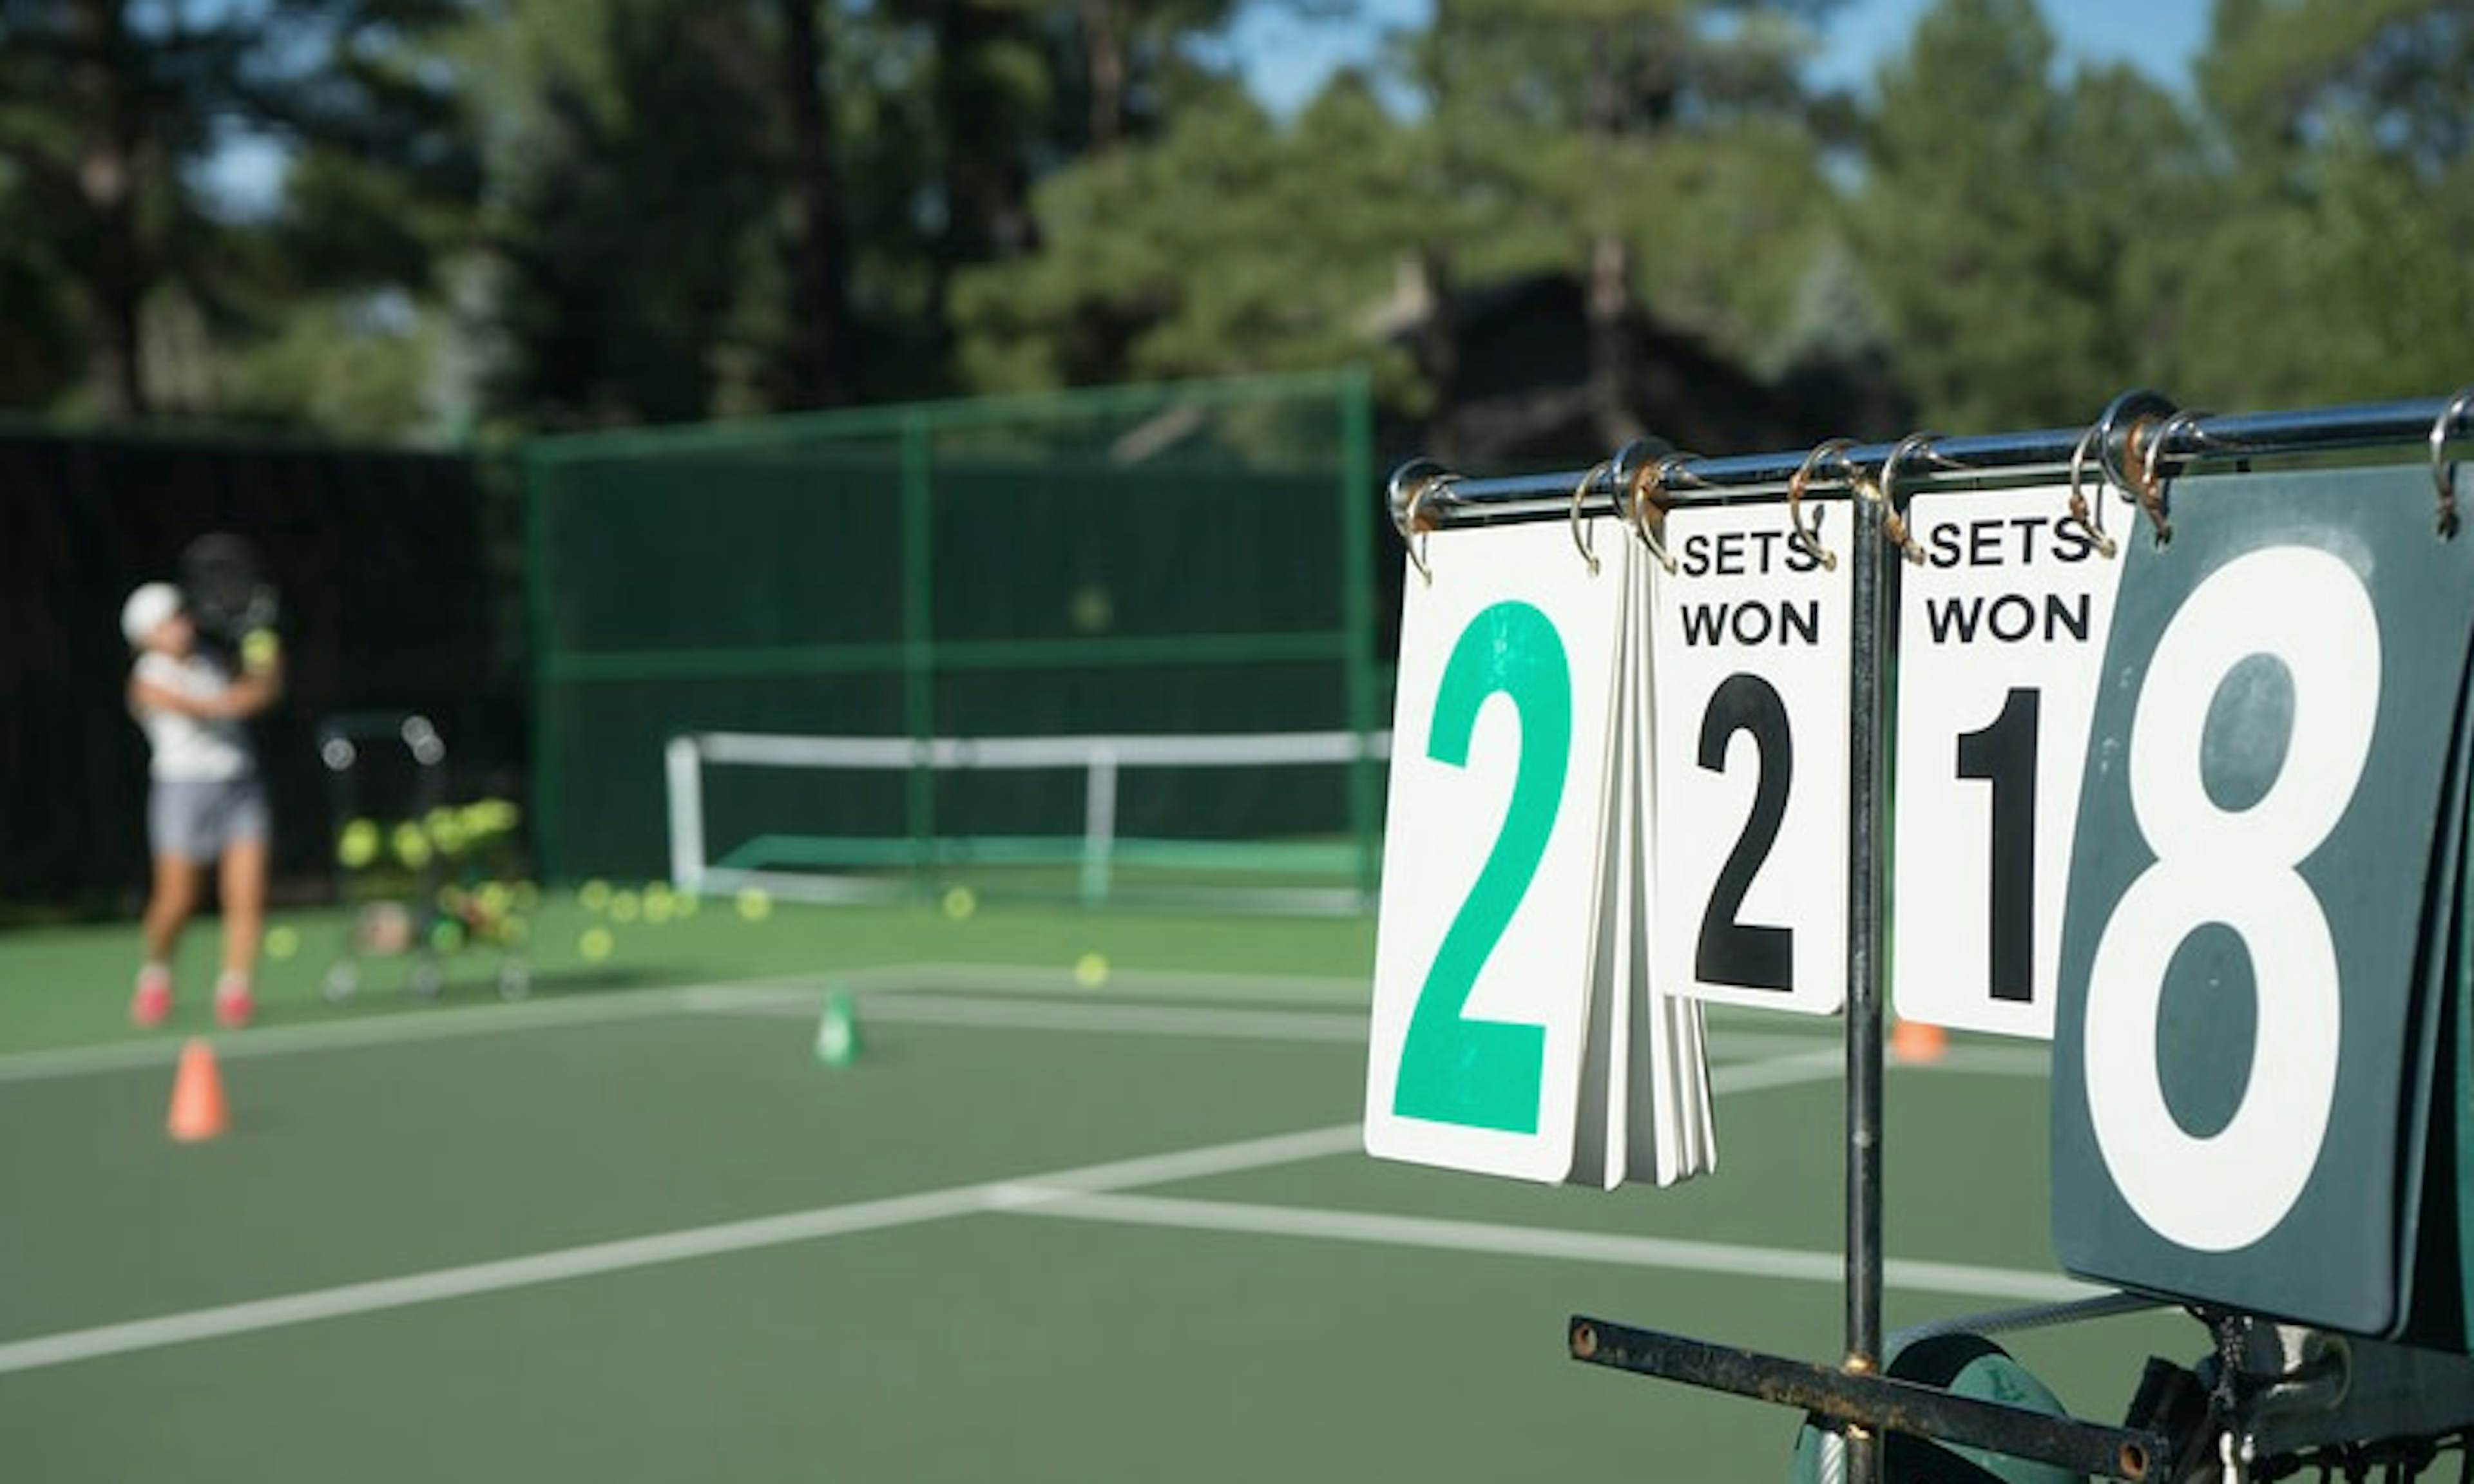 Tennis court in London